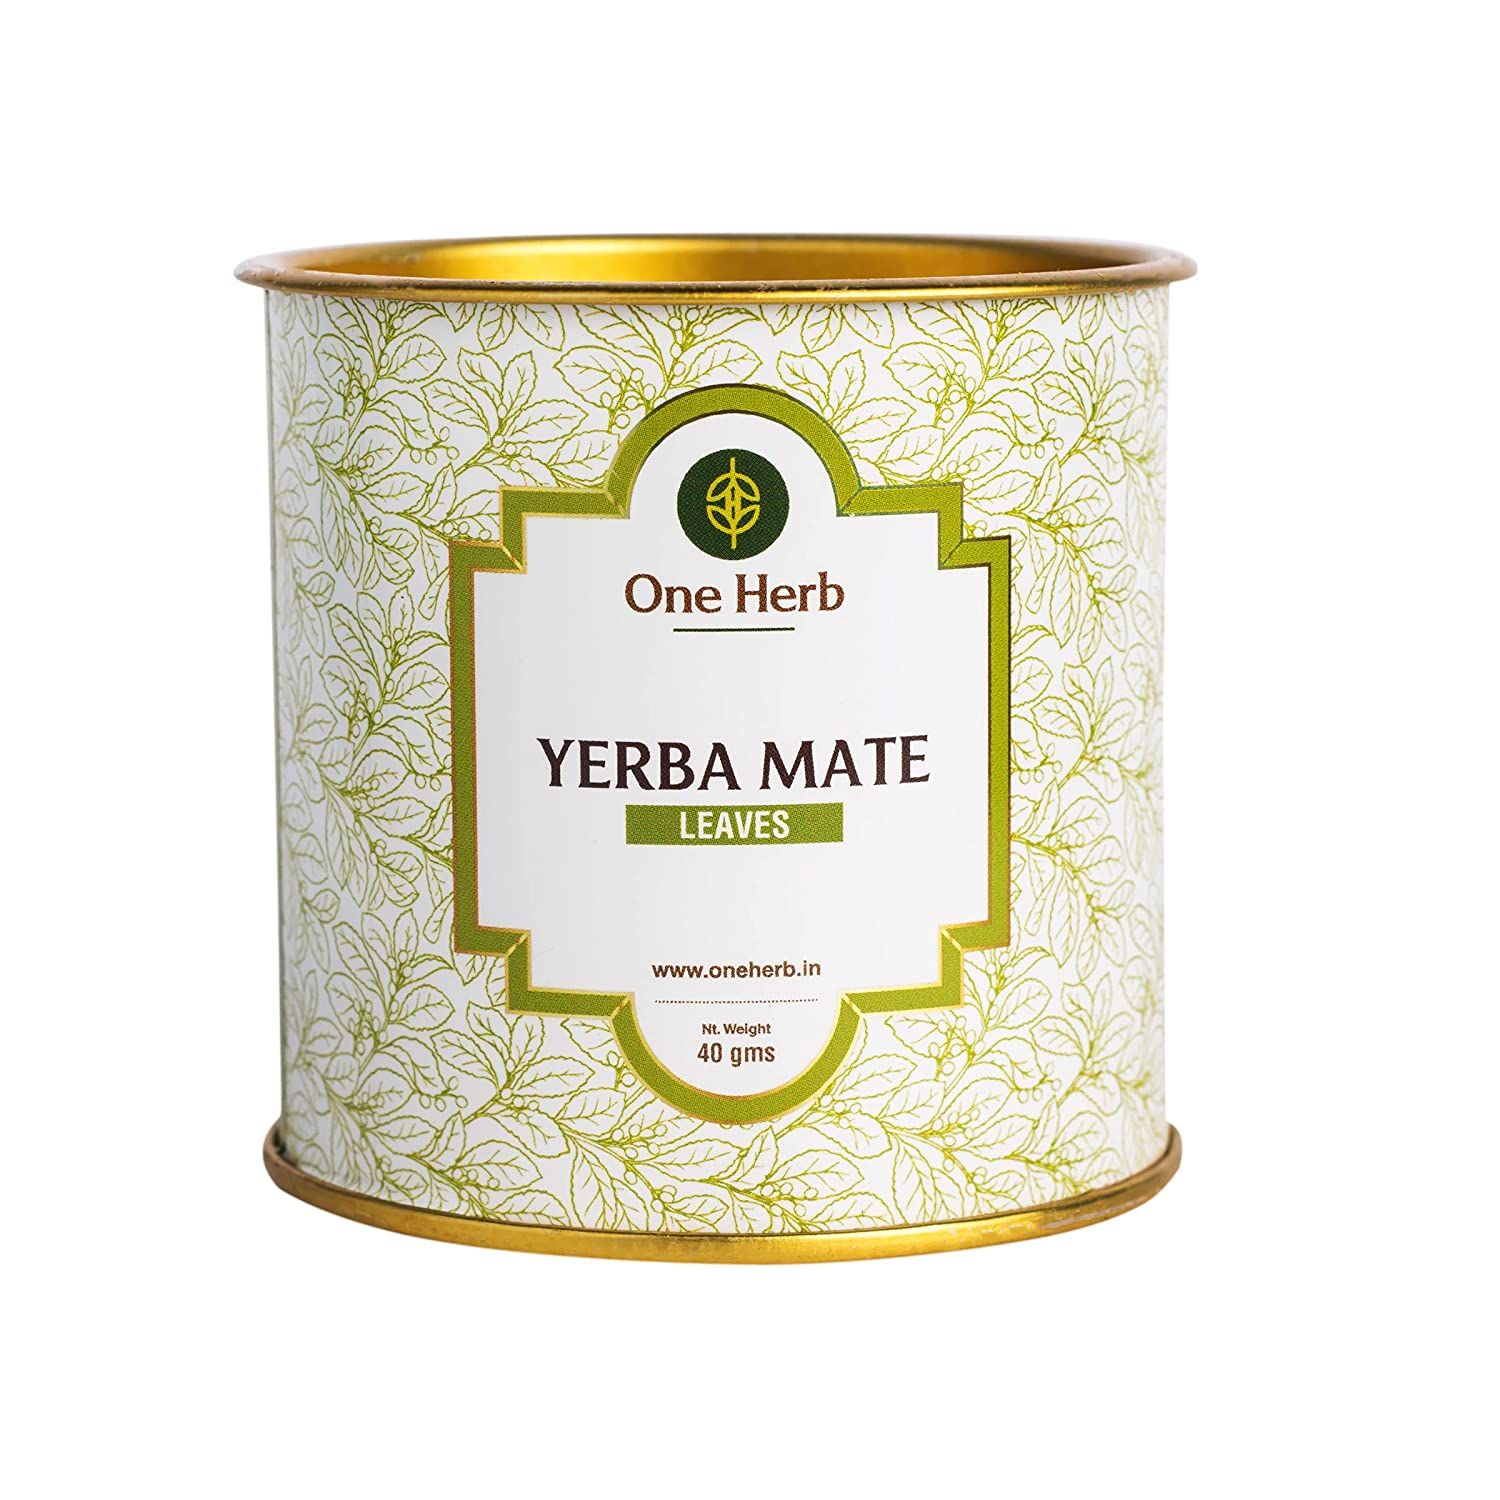 One Herb Yerba Mate Tea Image